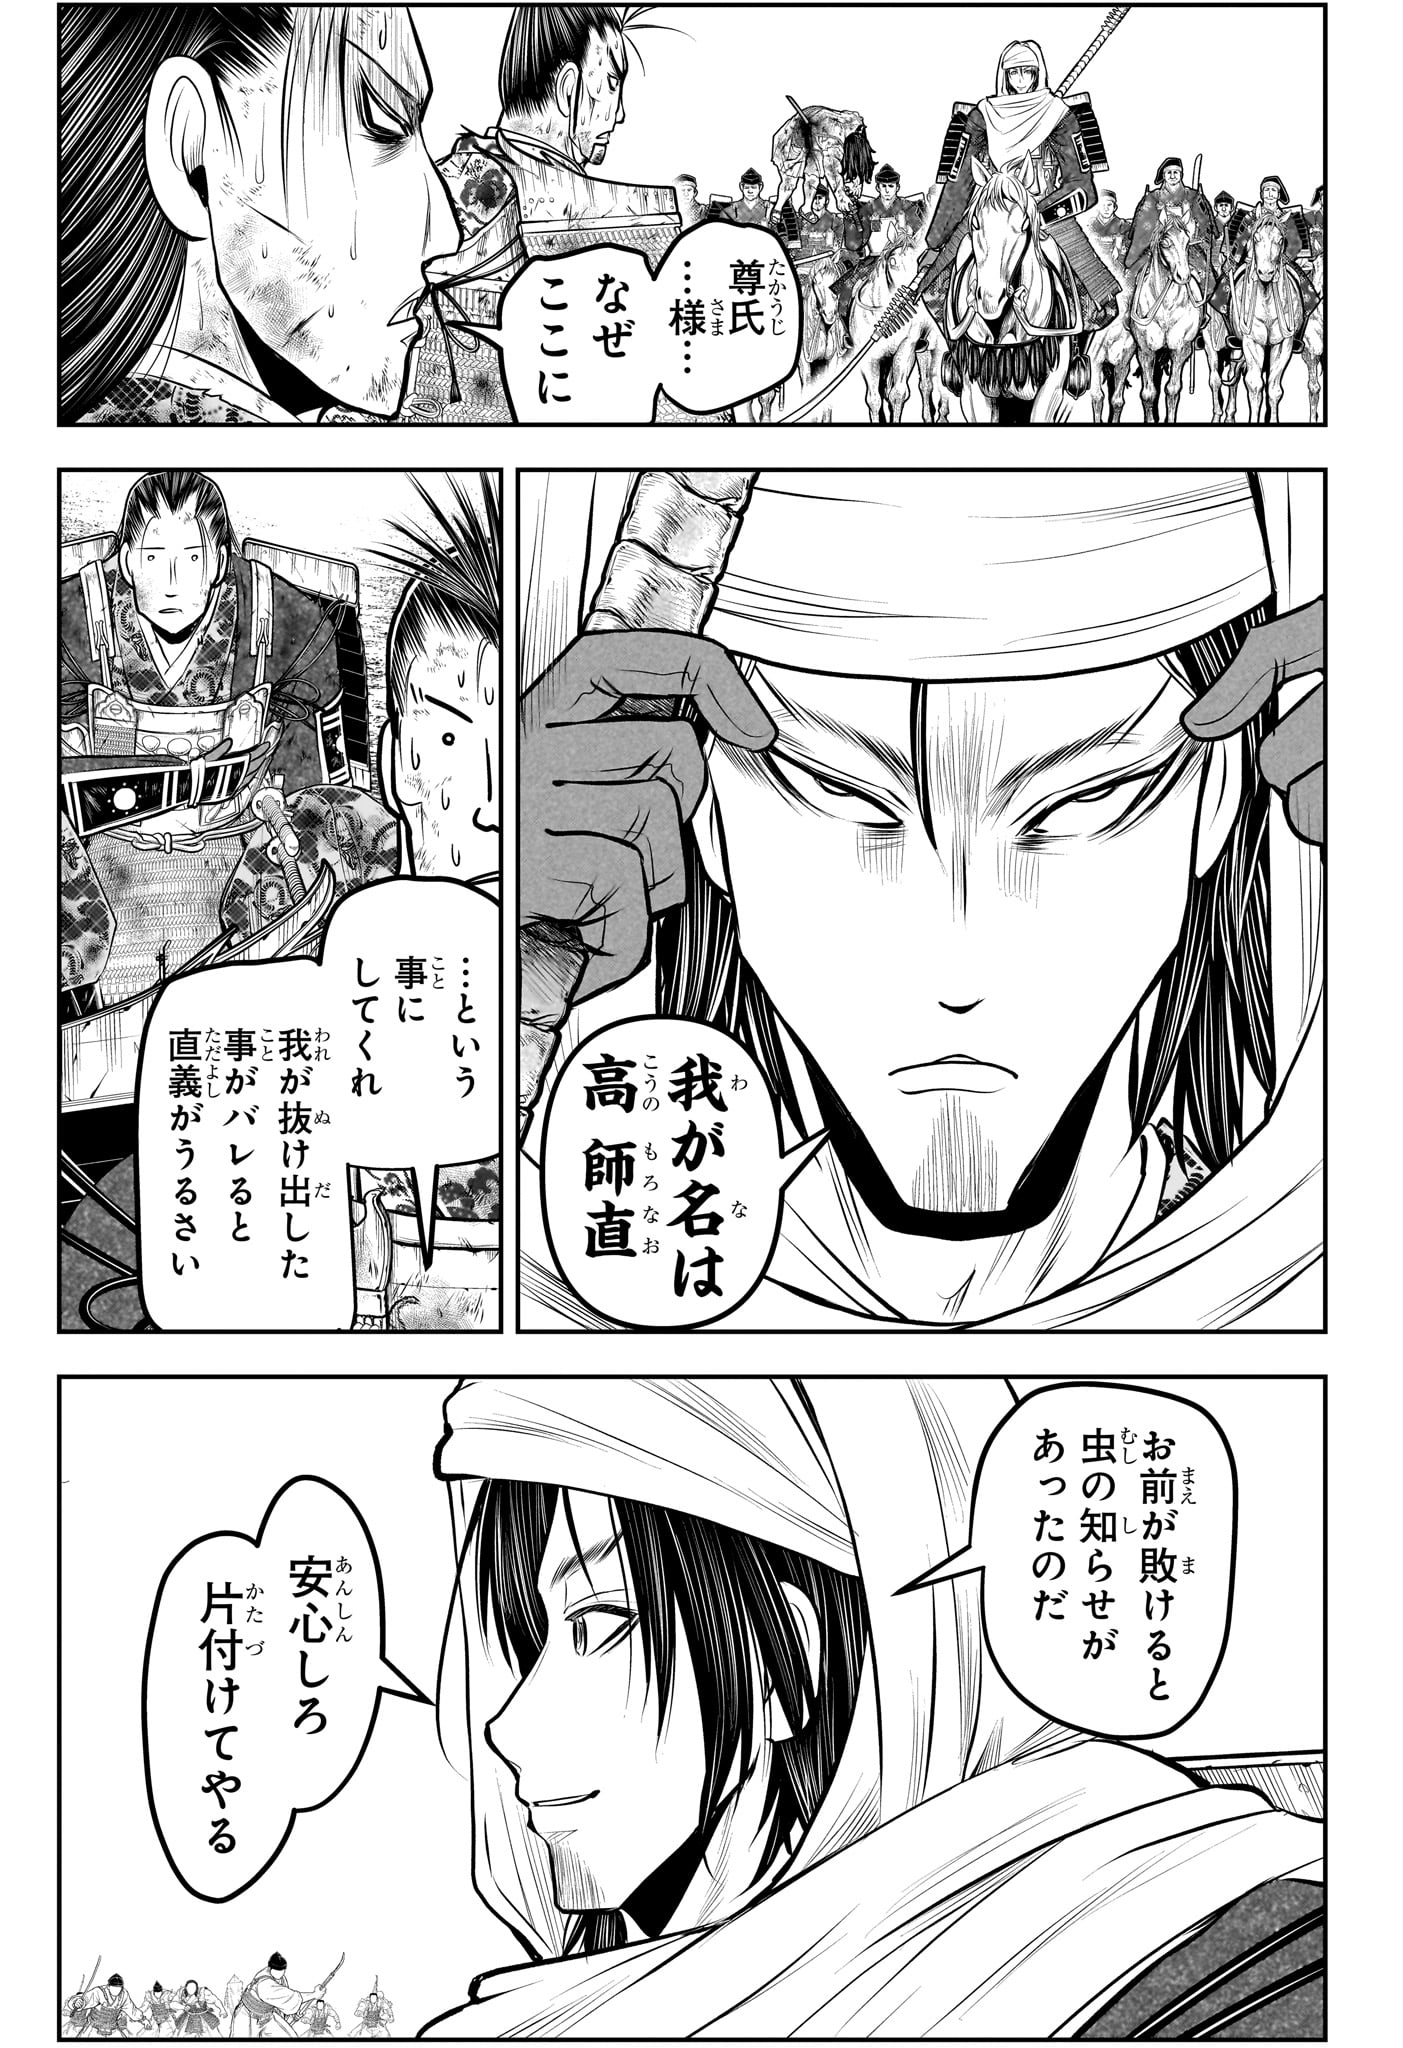 Nige Jouzu no Wakagimi - Chapter 165 - Page 15